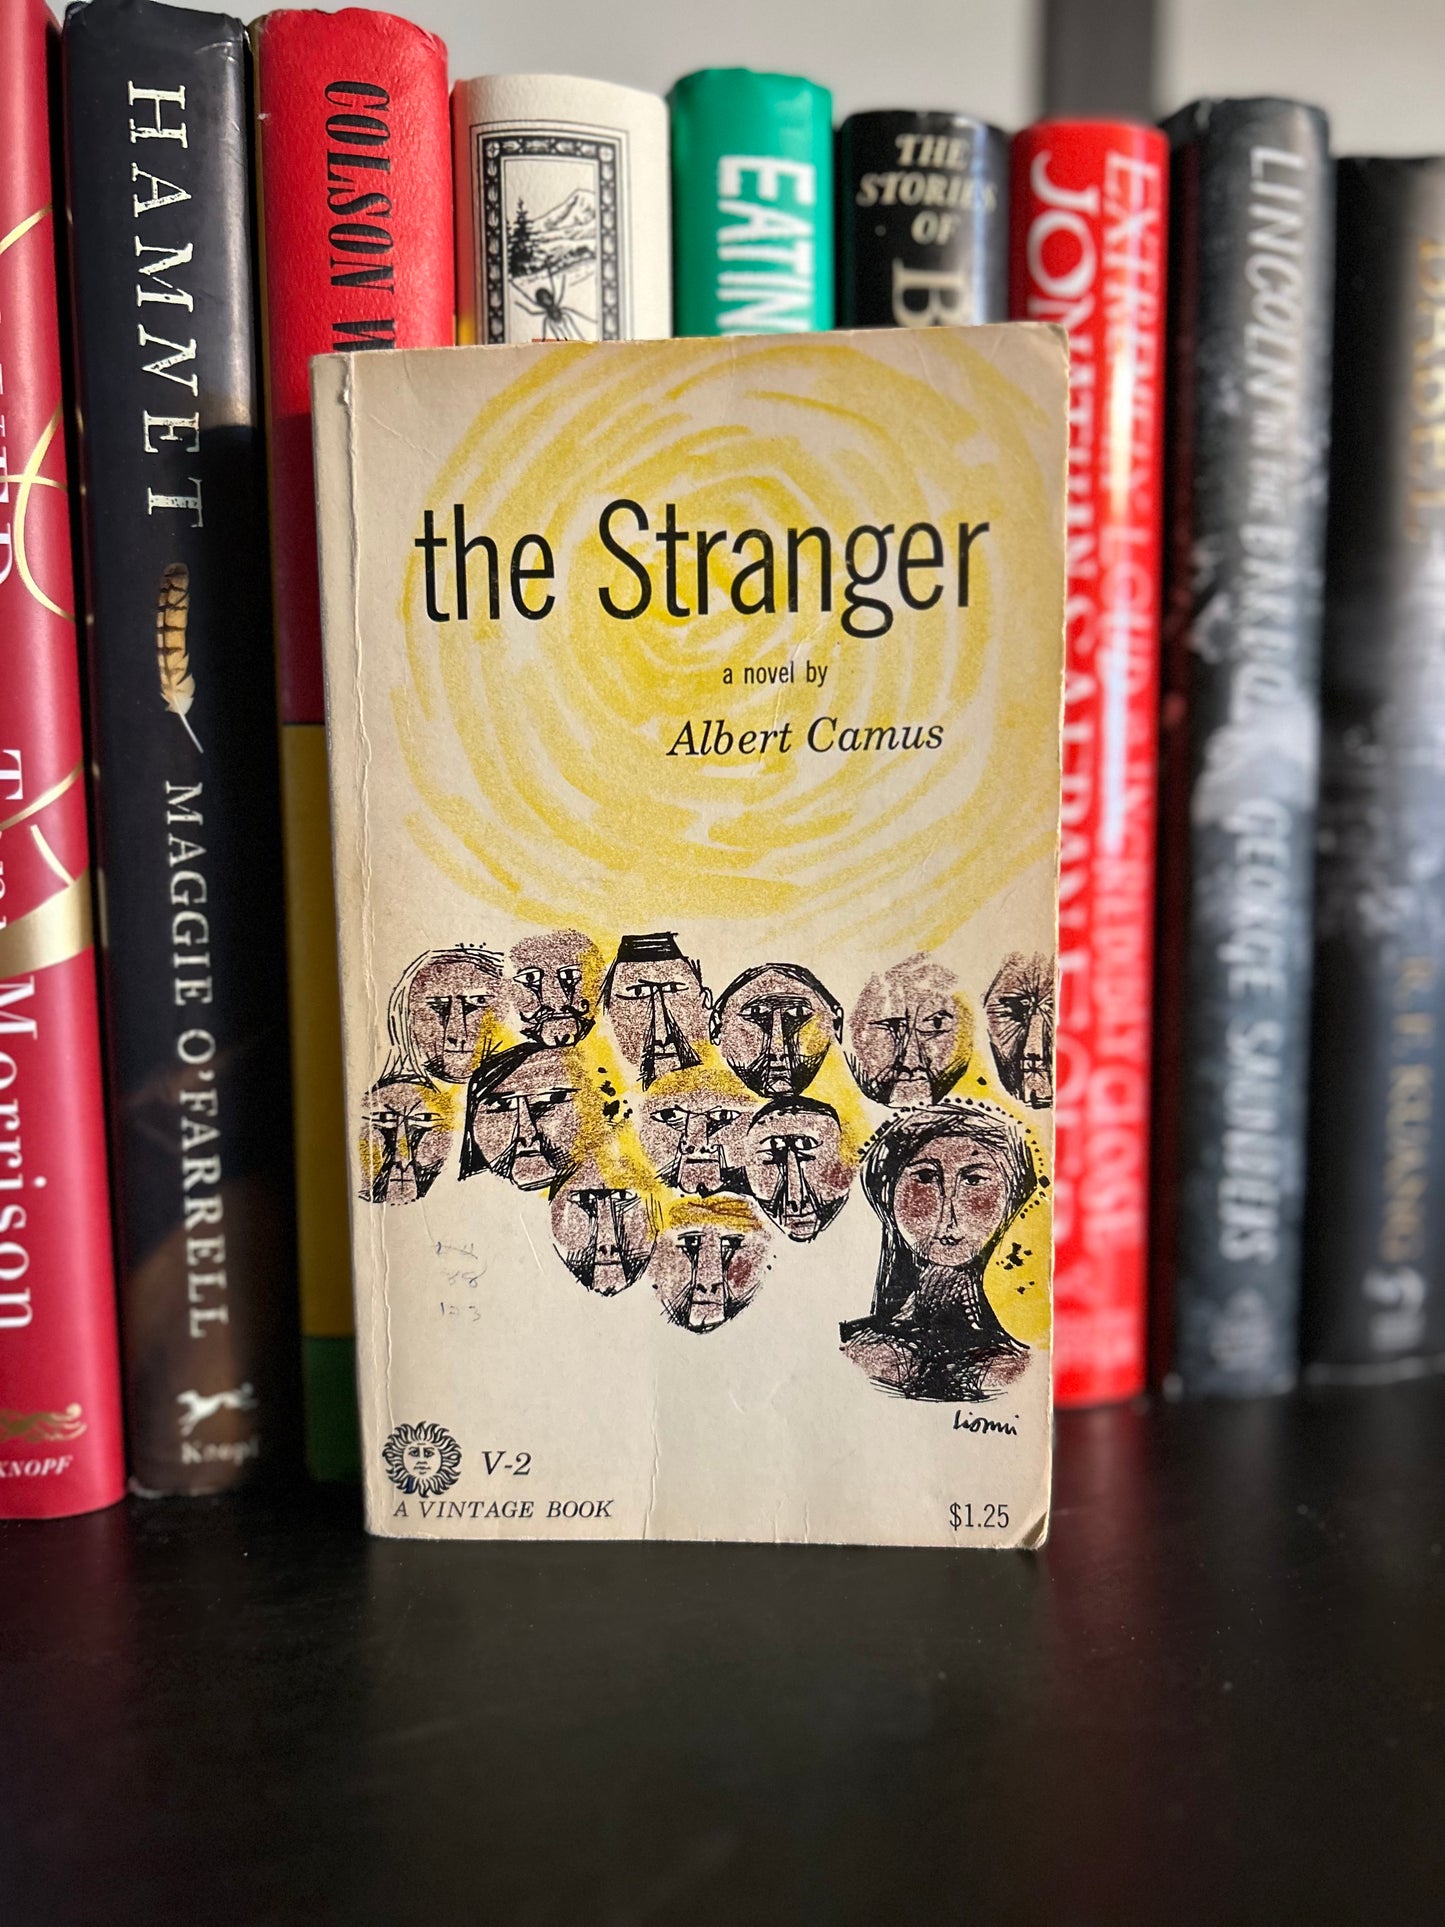 The Stranger by Albert Camus (vintage)